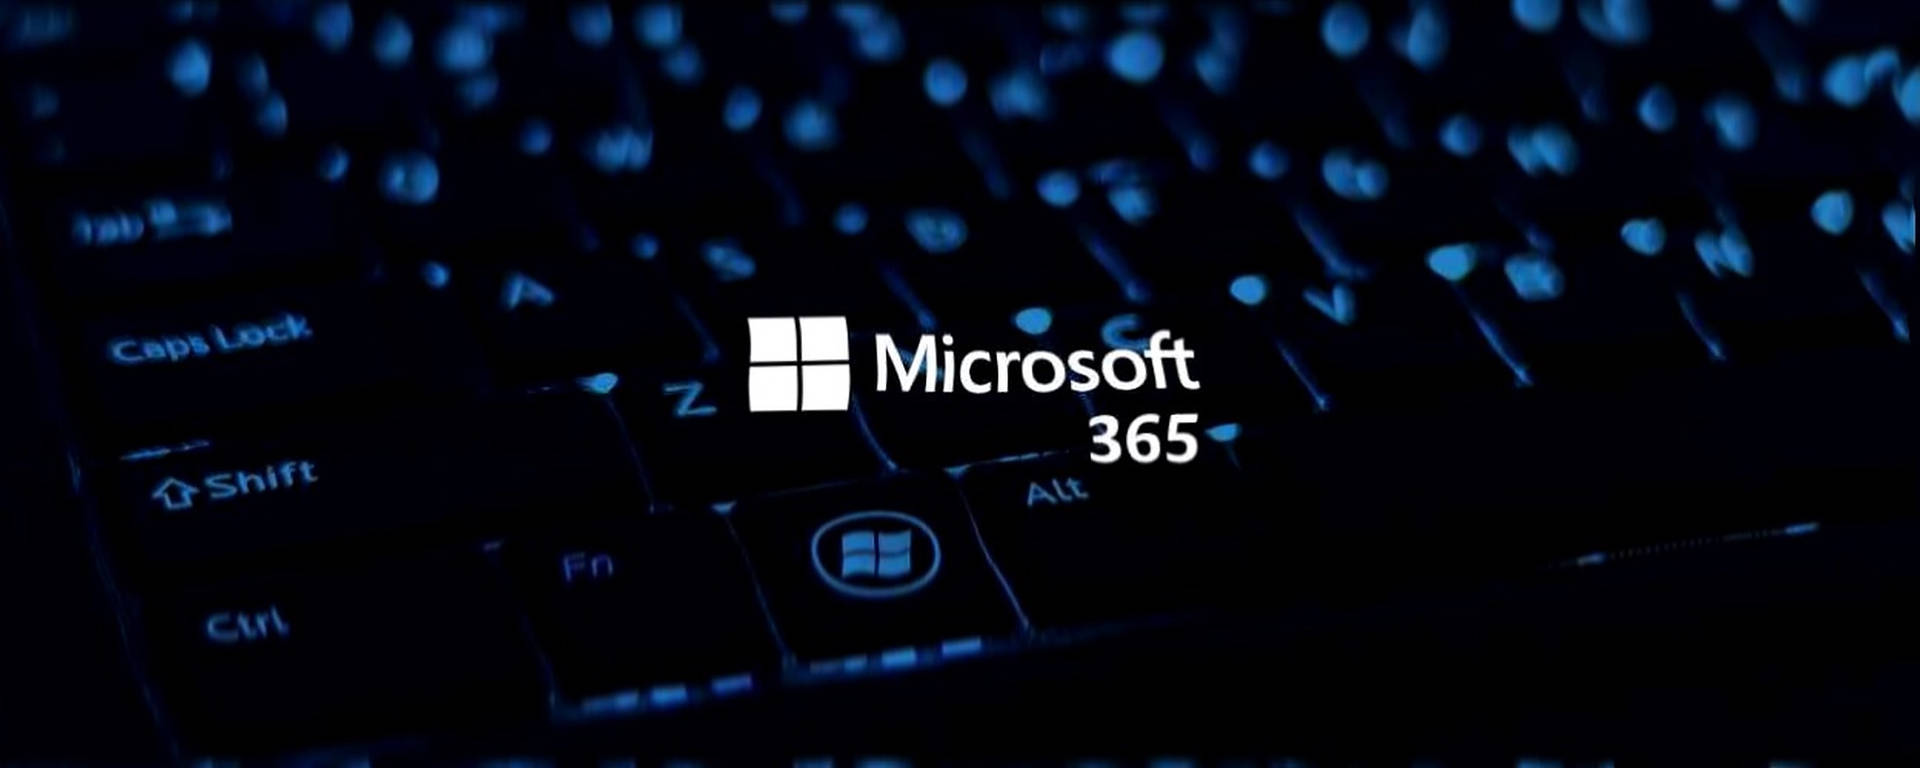 Microsoft Office 365 Keyboard Background